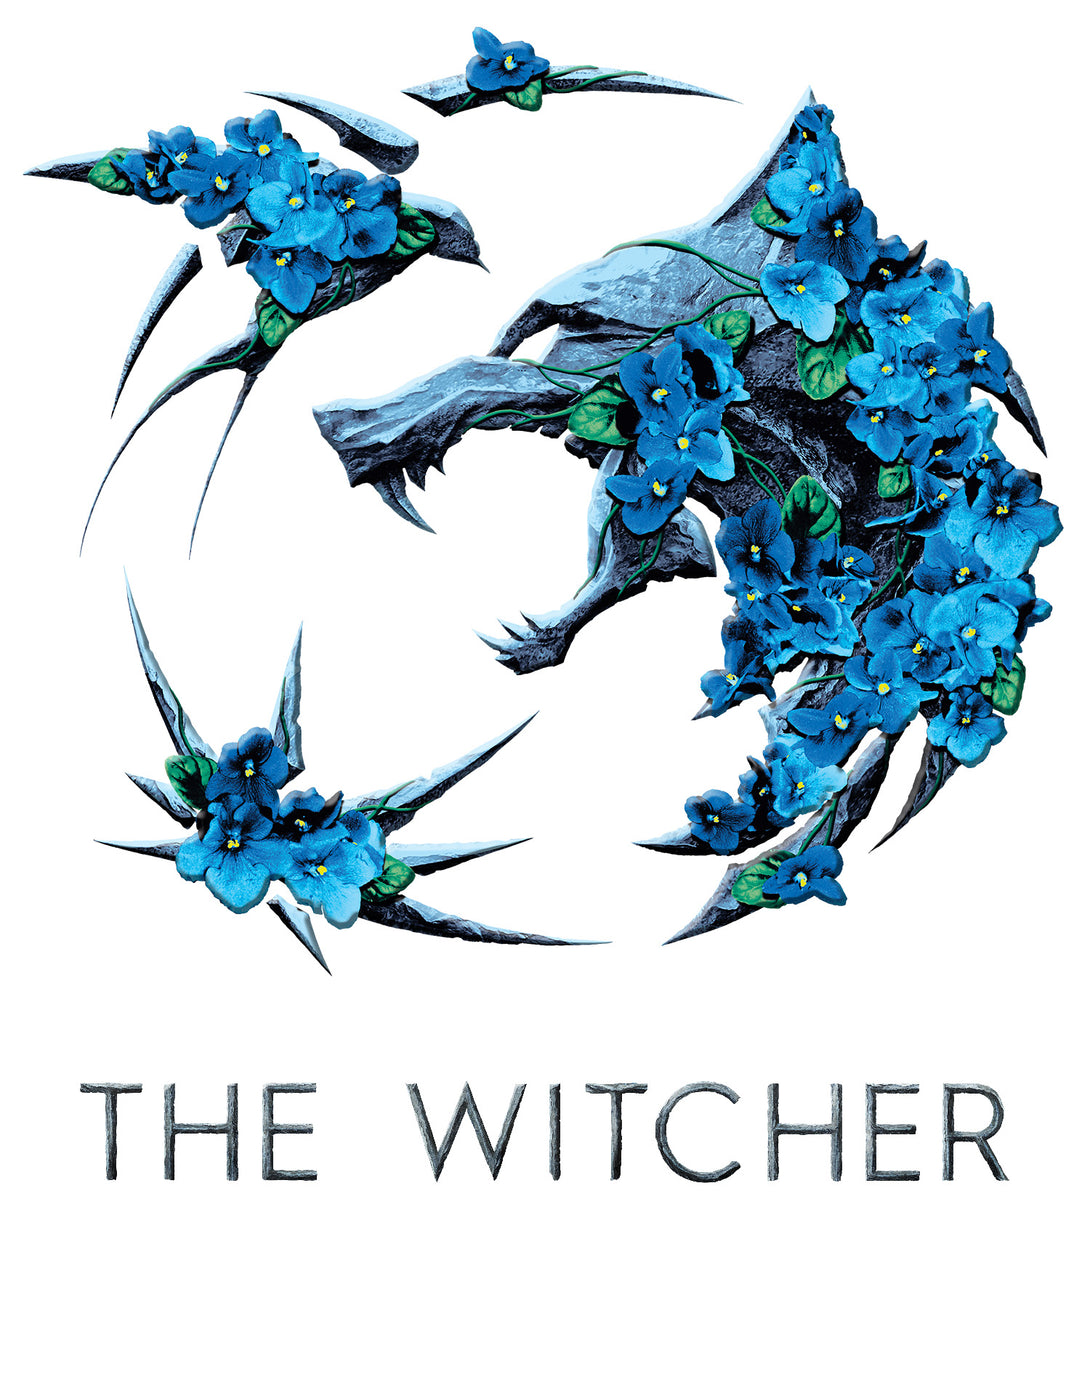 The Witcher Logo Metallic Flowers Official Men's T-Shirt White - Urban Species Design Close Up